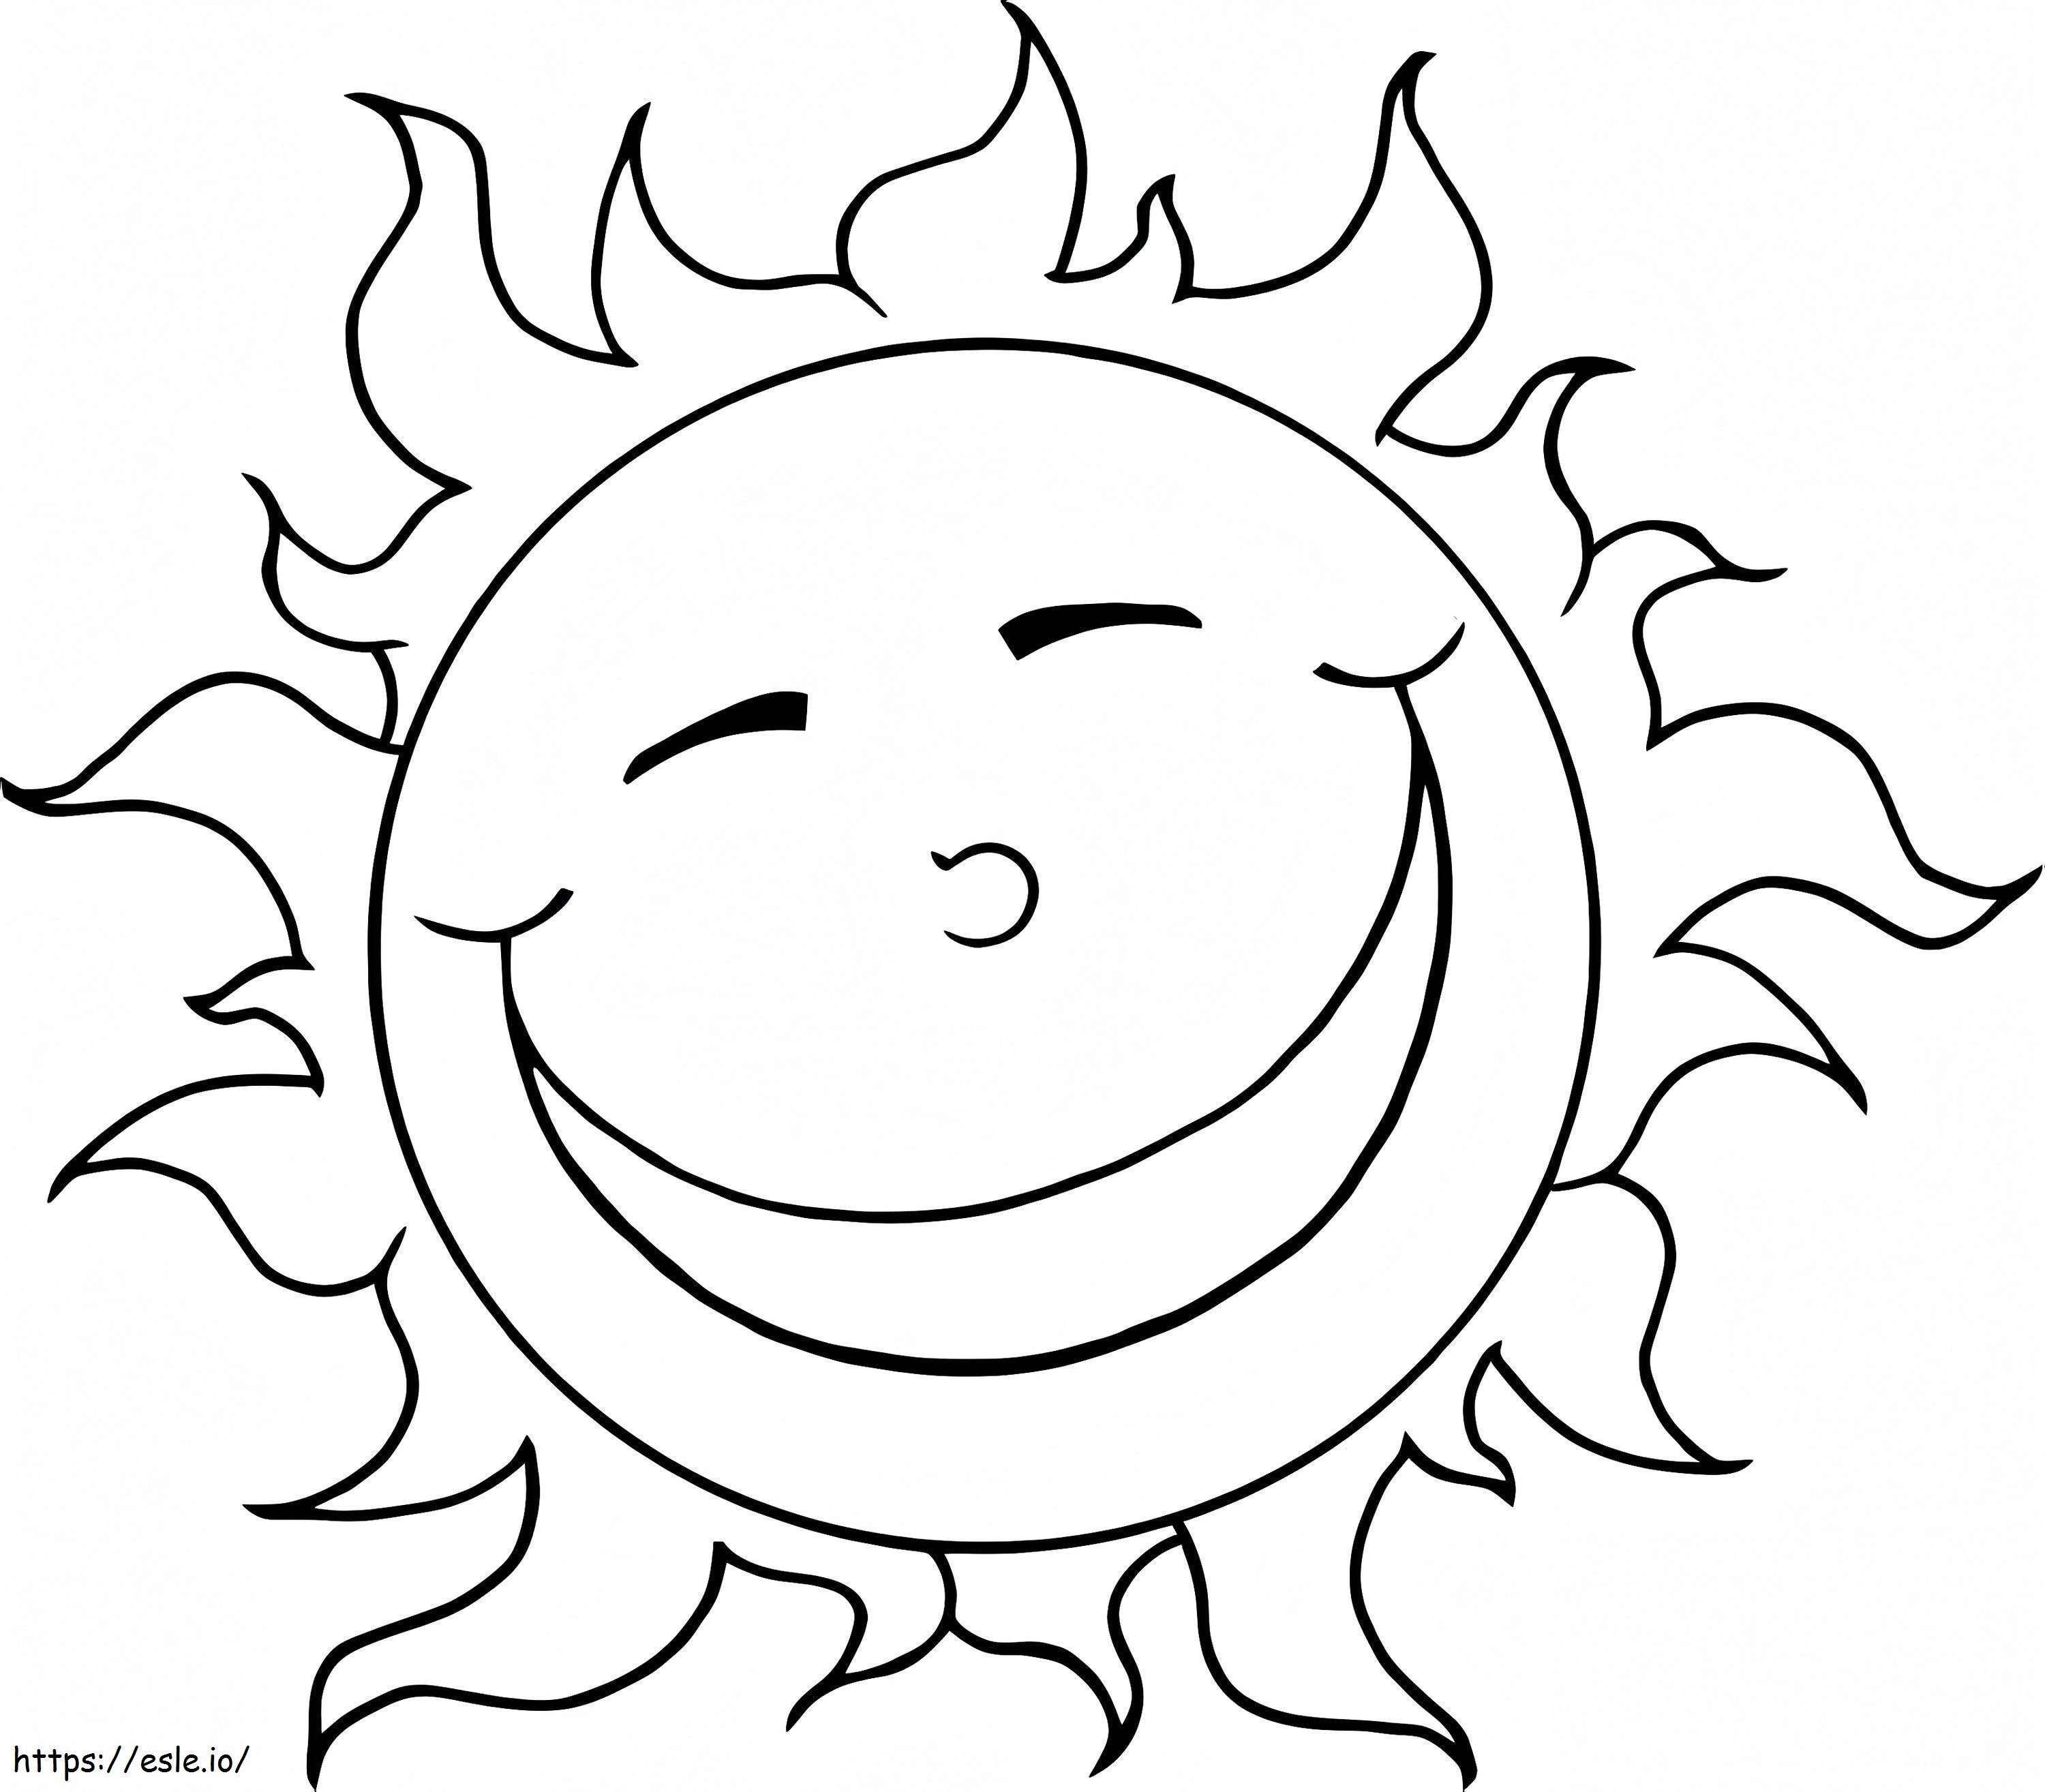 Sun Free Printable coloring page